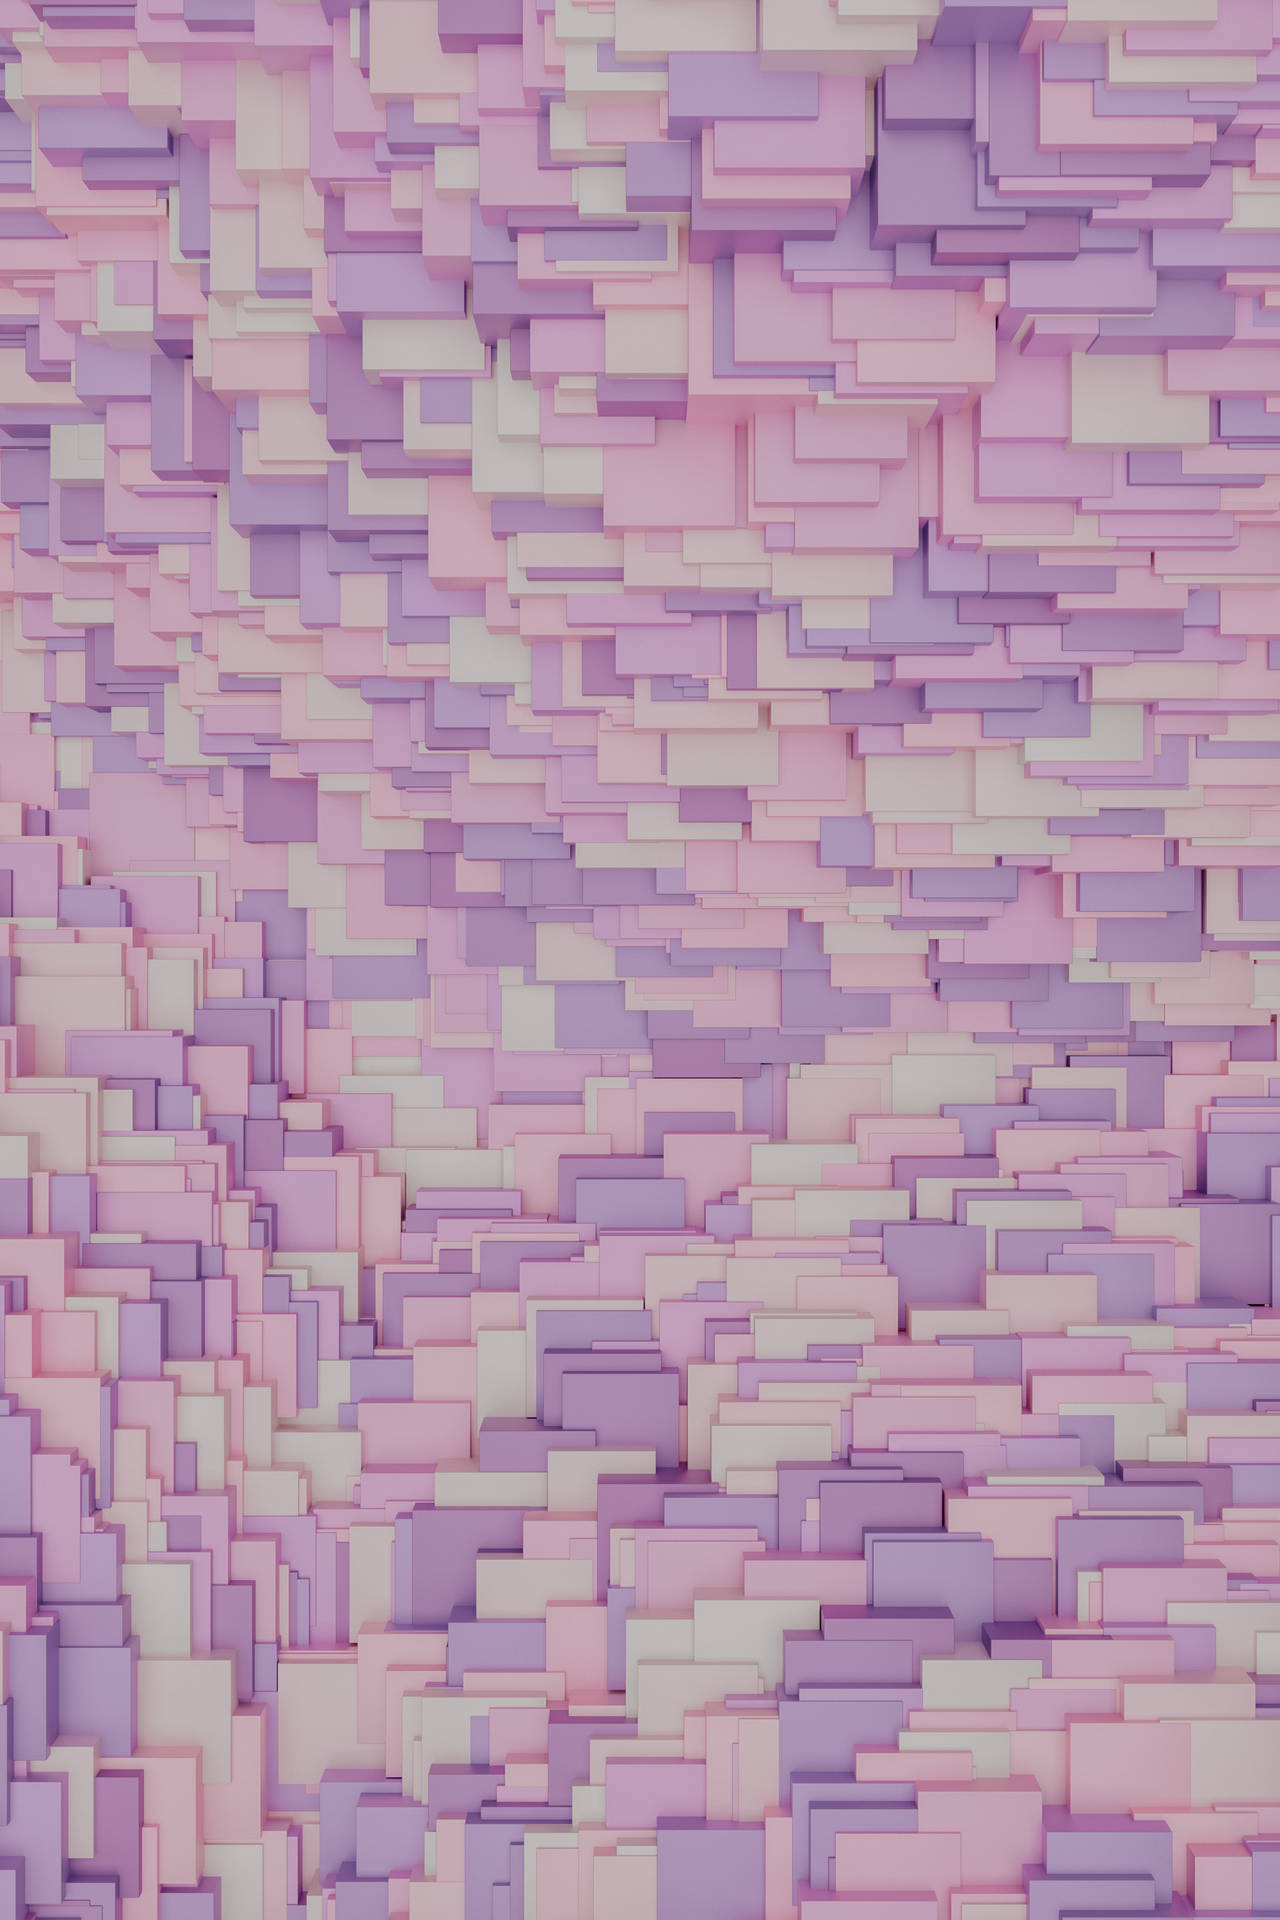 Lavender Aesthetic 3d Blocks Texture